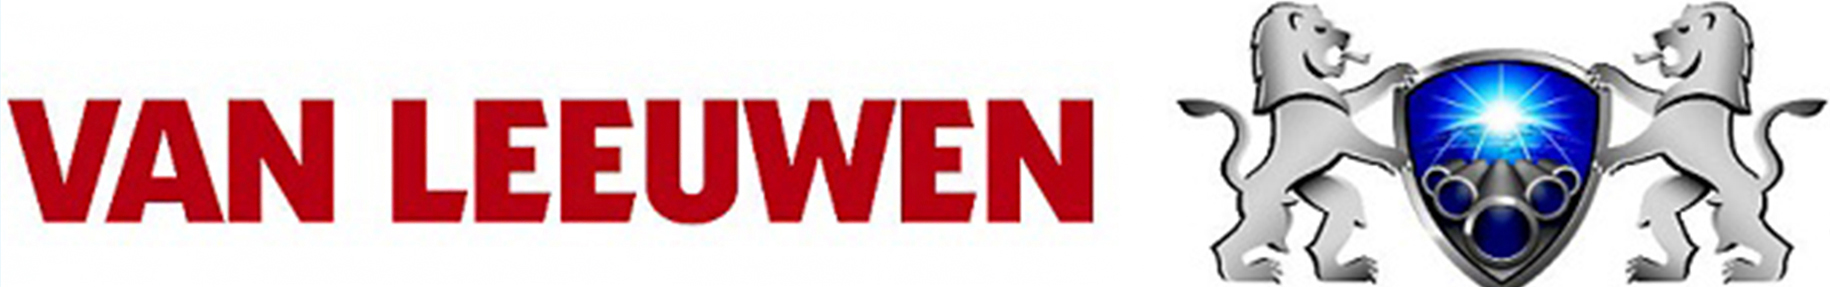 Van Leeuwen logo Metalfinish Group